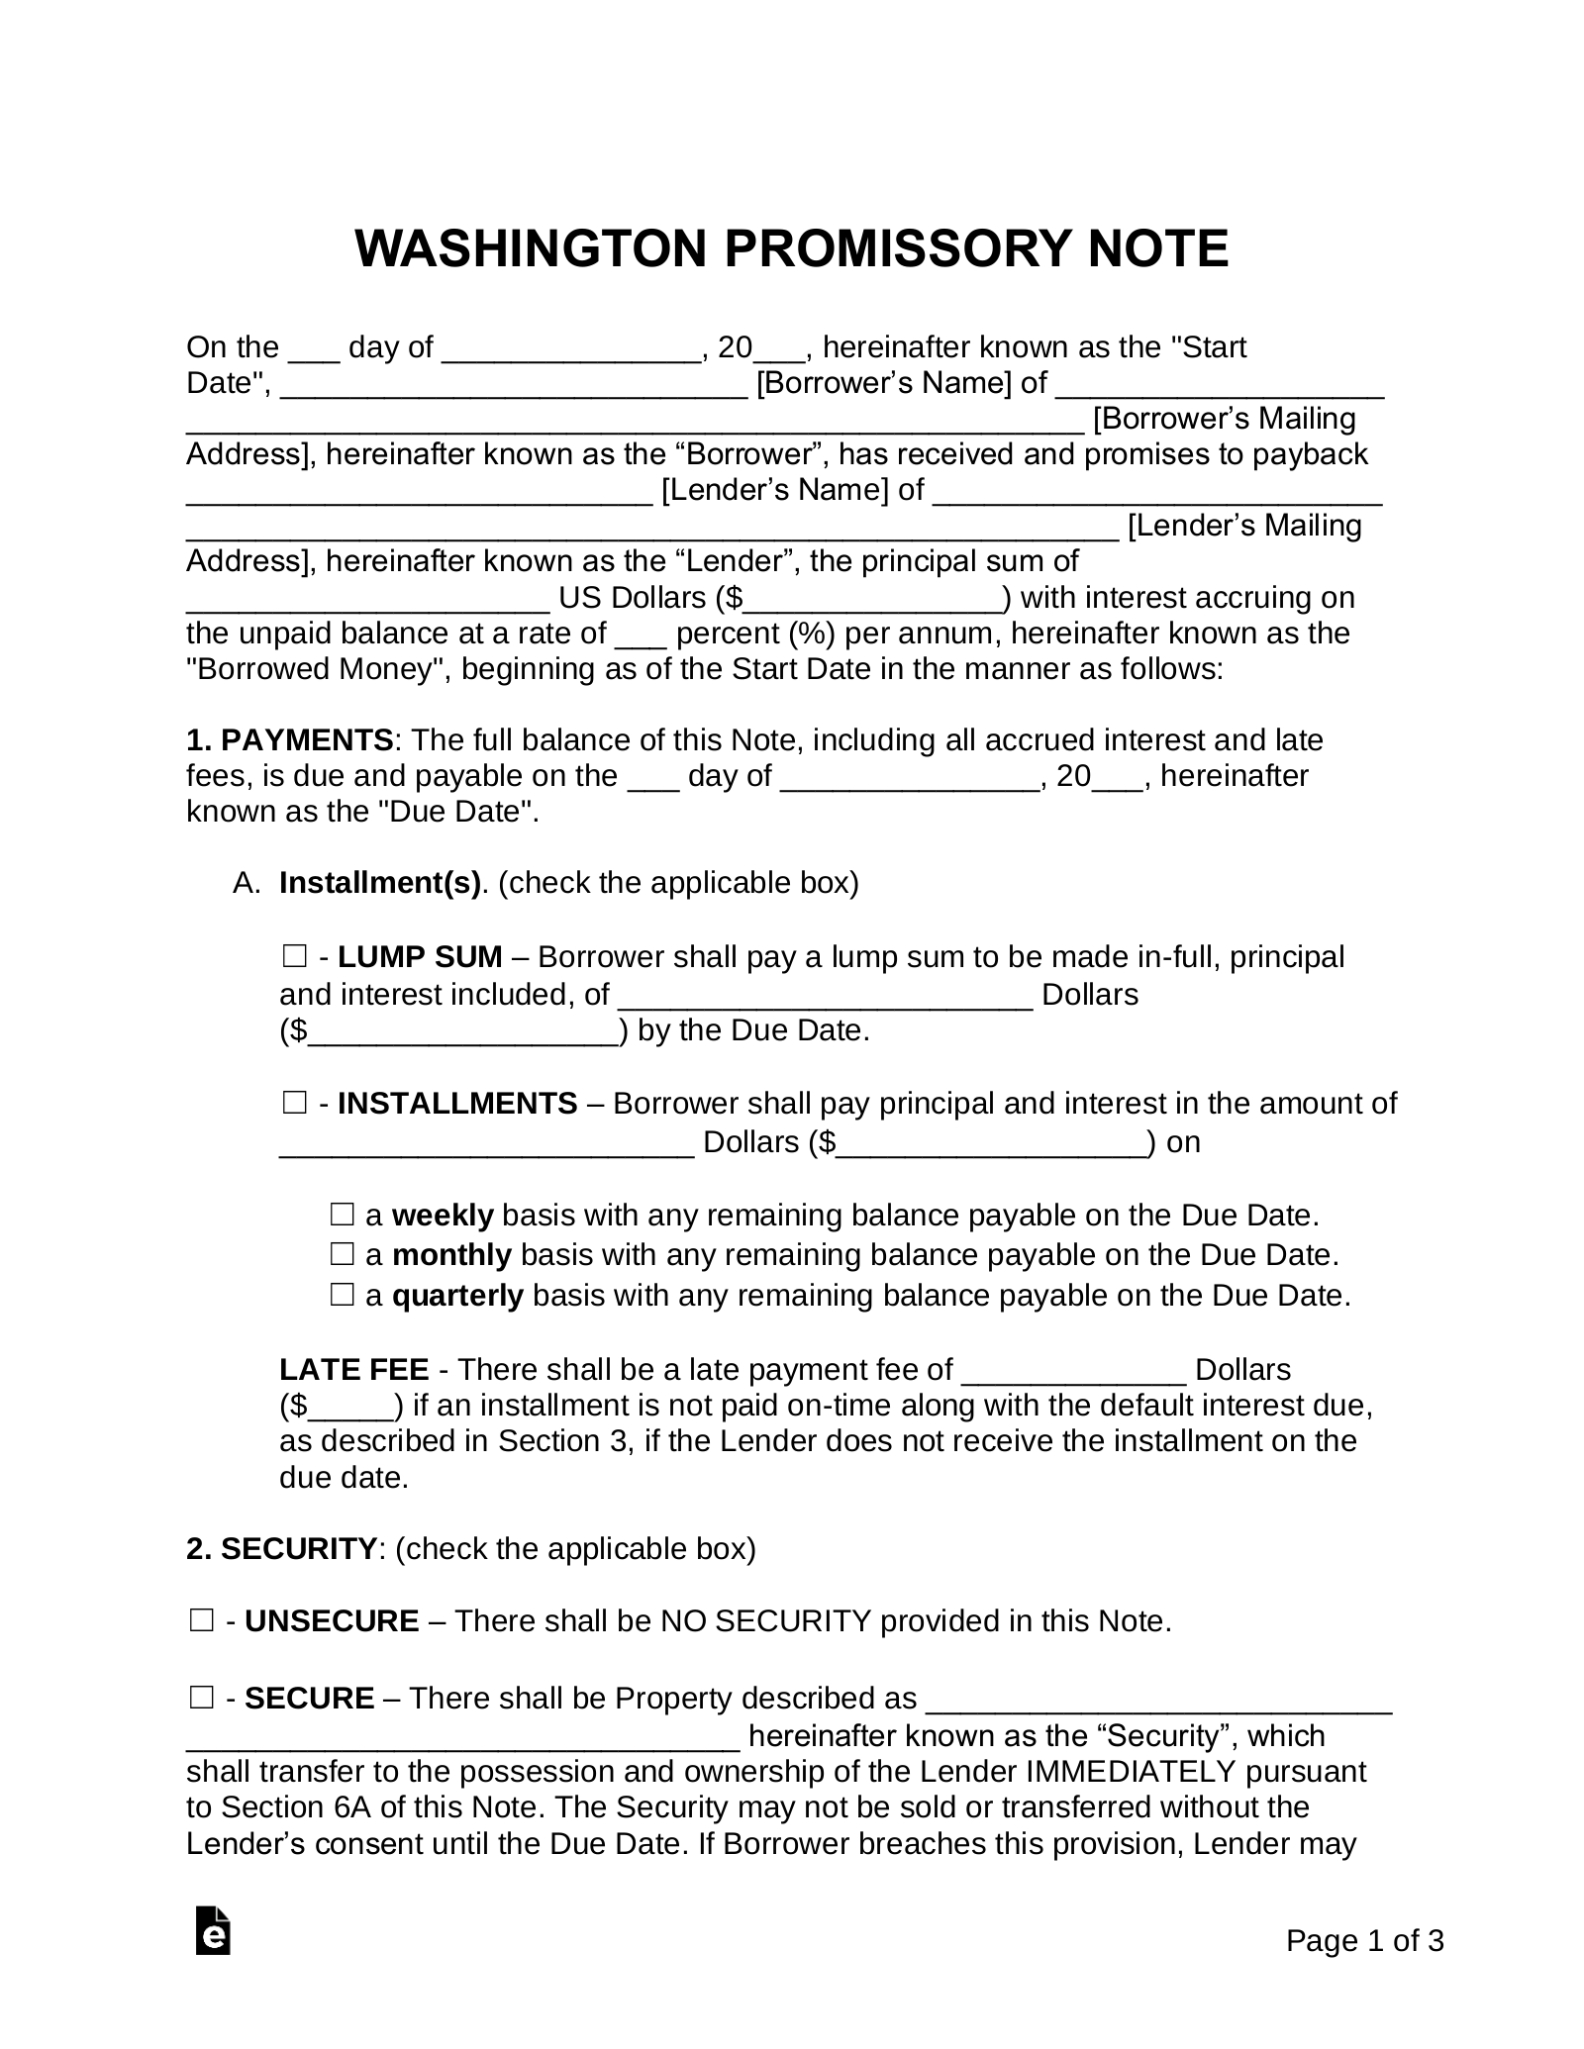 Free Washington Promissory Note Templates - Pdf | Word - Eforms Inside Loan Promissory Note Template